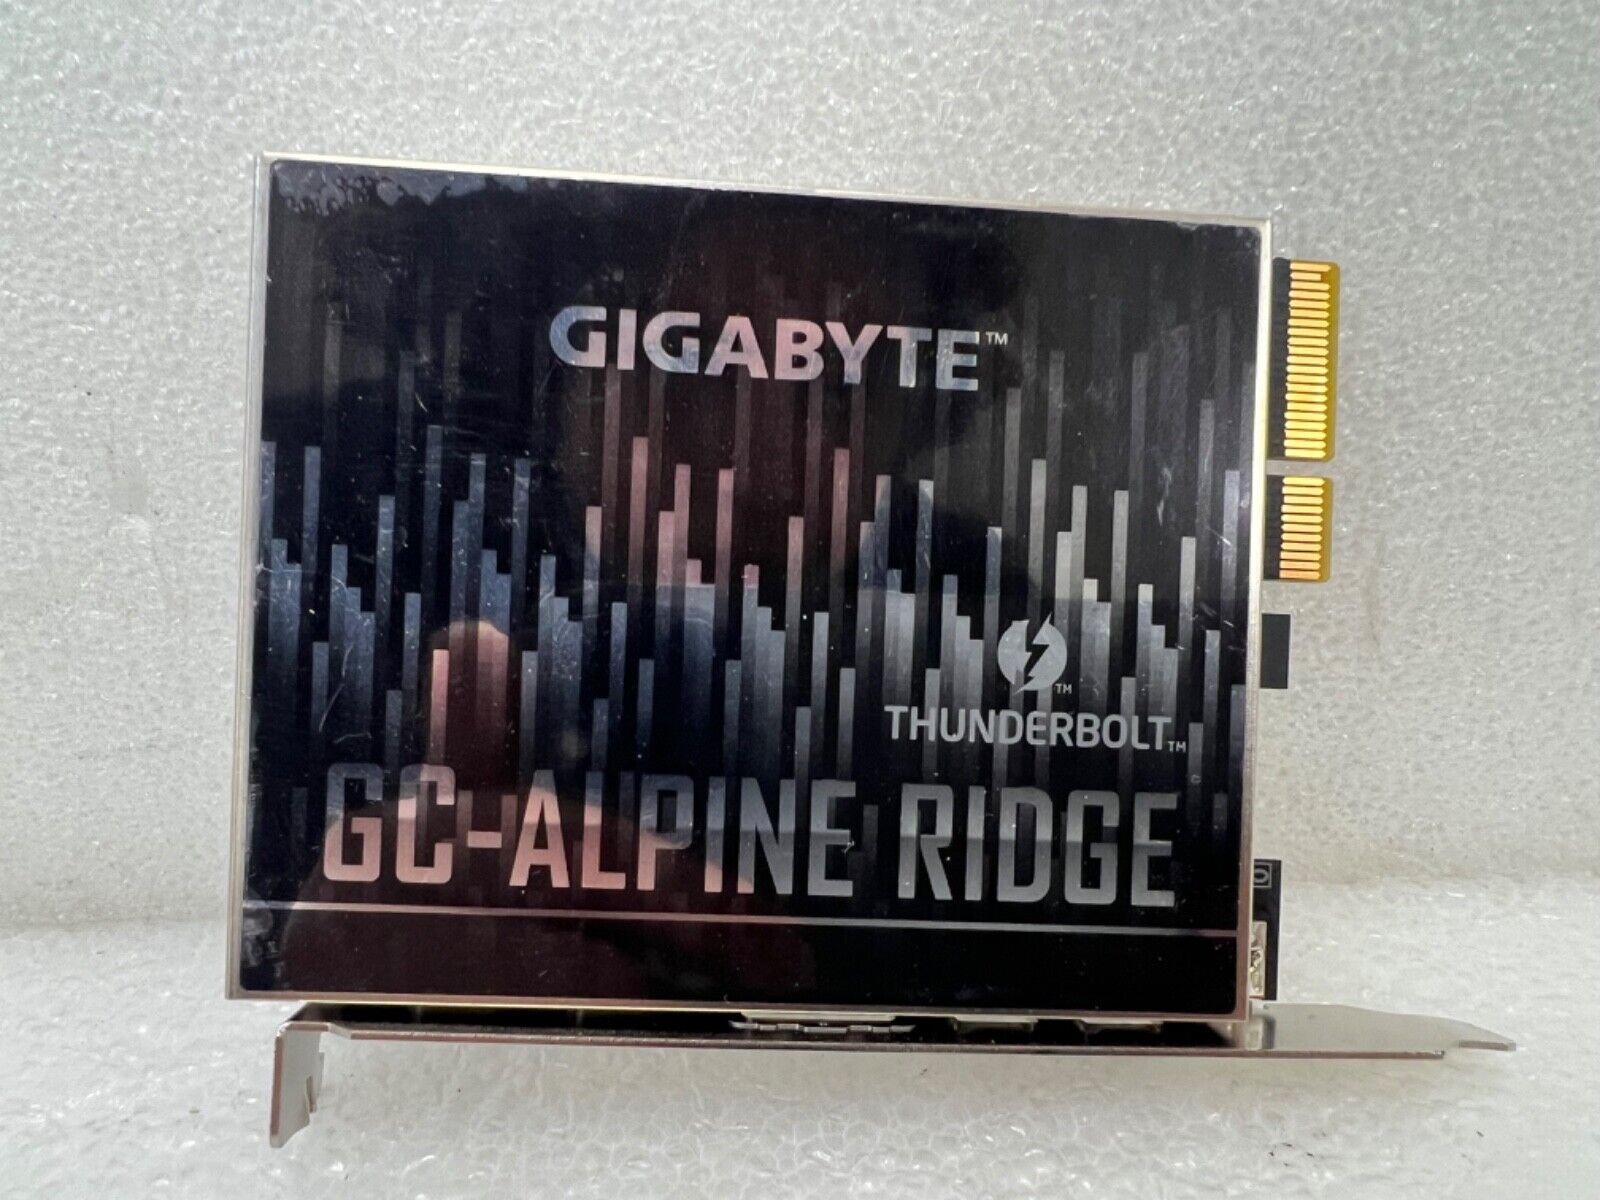 Gigabyte GC-Alpine Ridge Thunderbolt 3 USB-C Card - Black / Great Condition